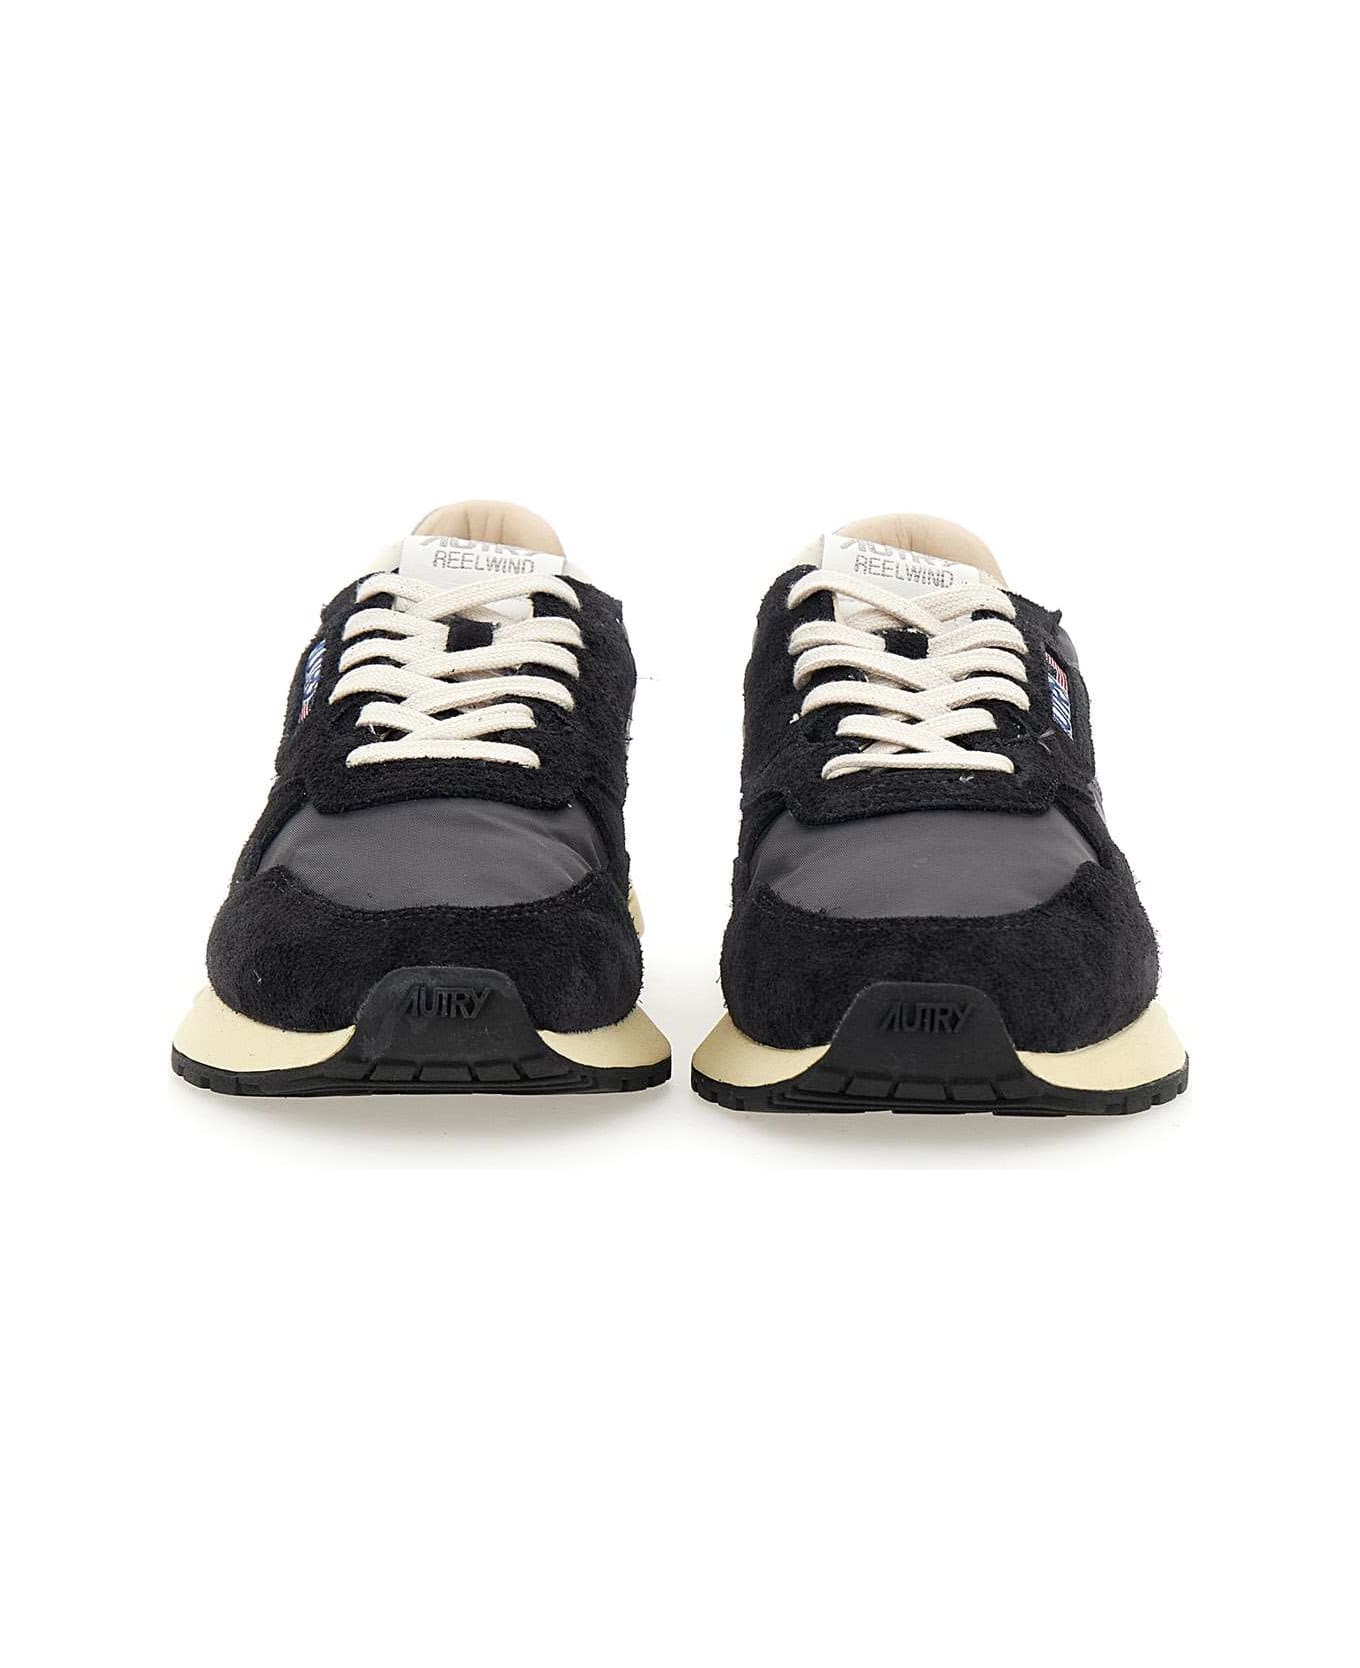 Autry "wwlm Nc05" Sneakers - BLACK/grey